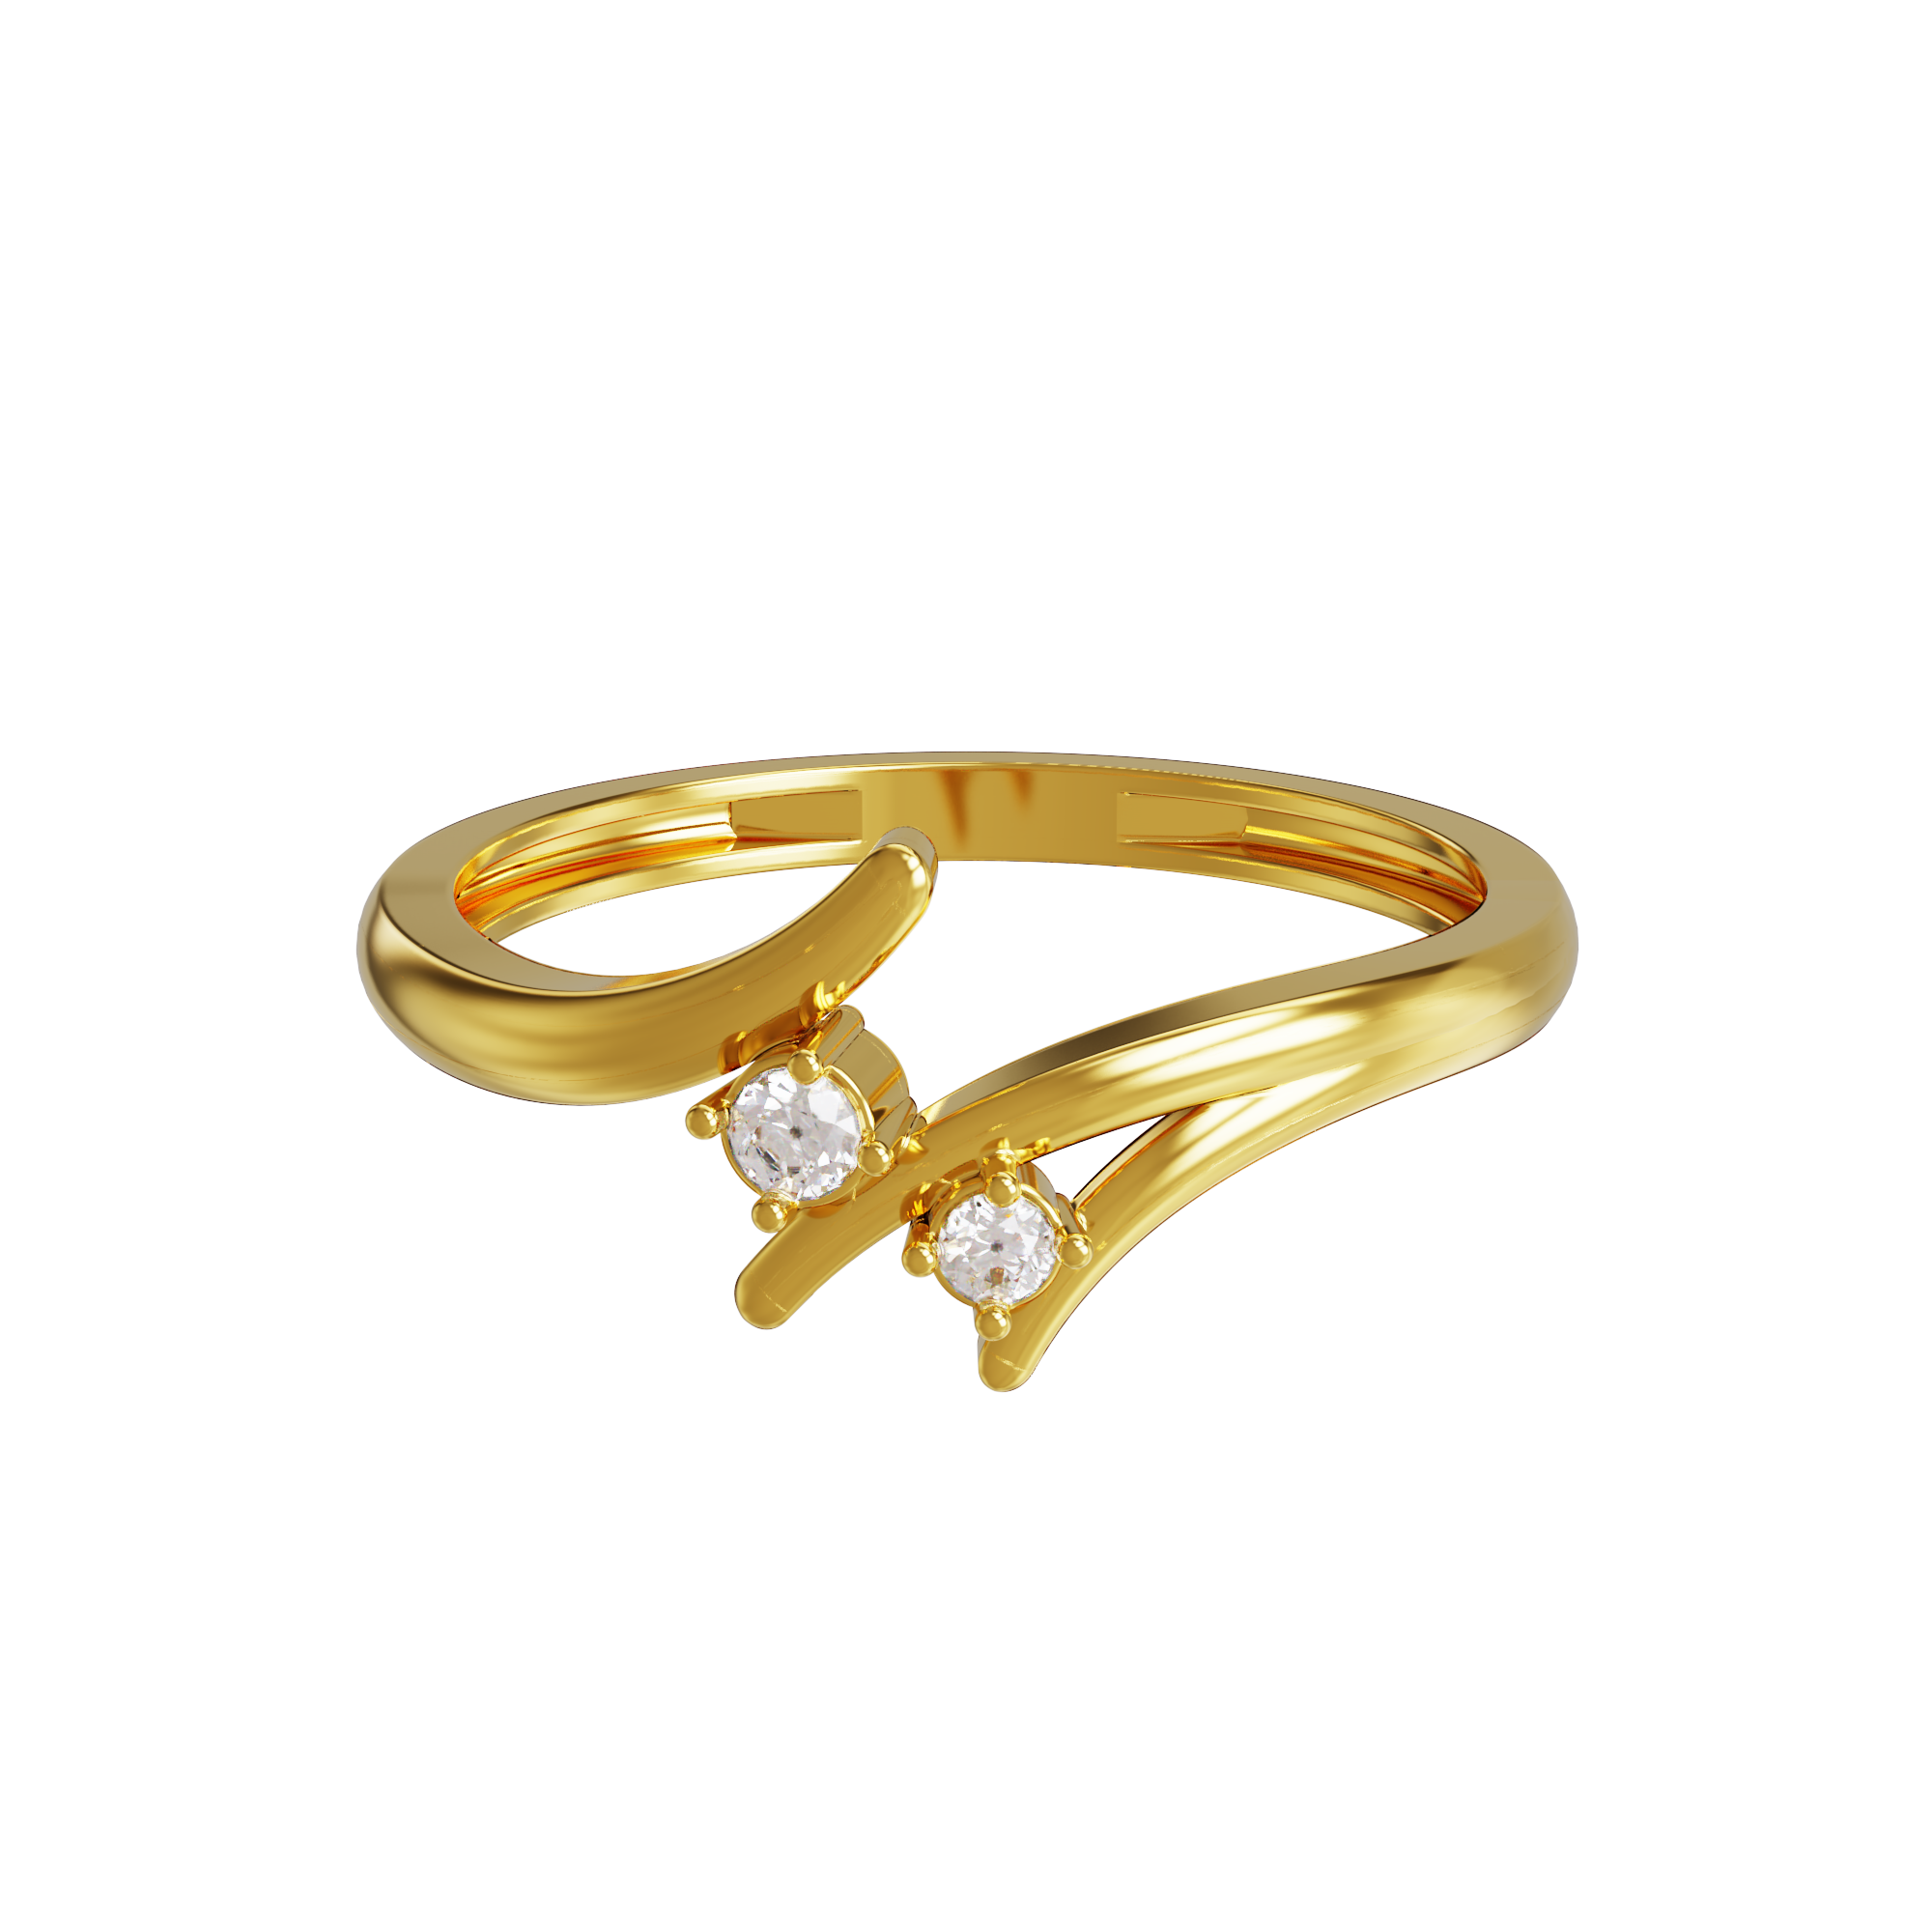 buy Gold Ring online 4.15 gram Amol Jewellers LLP